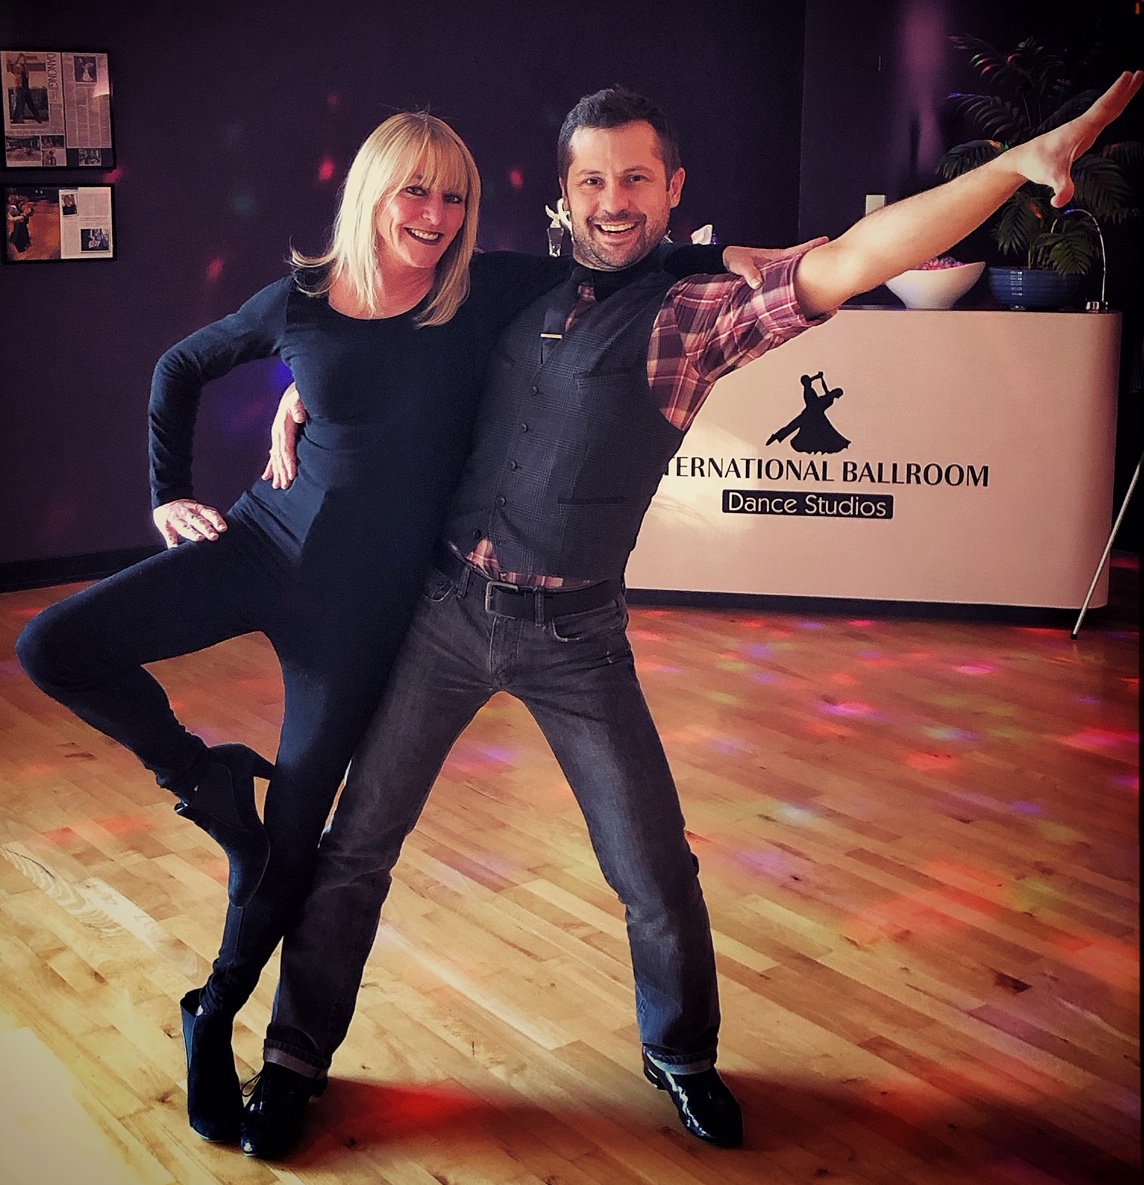 Kat Varn and Andrey Gergel at the International Ballroom Dance Studios